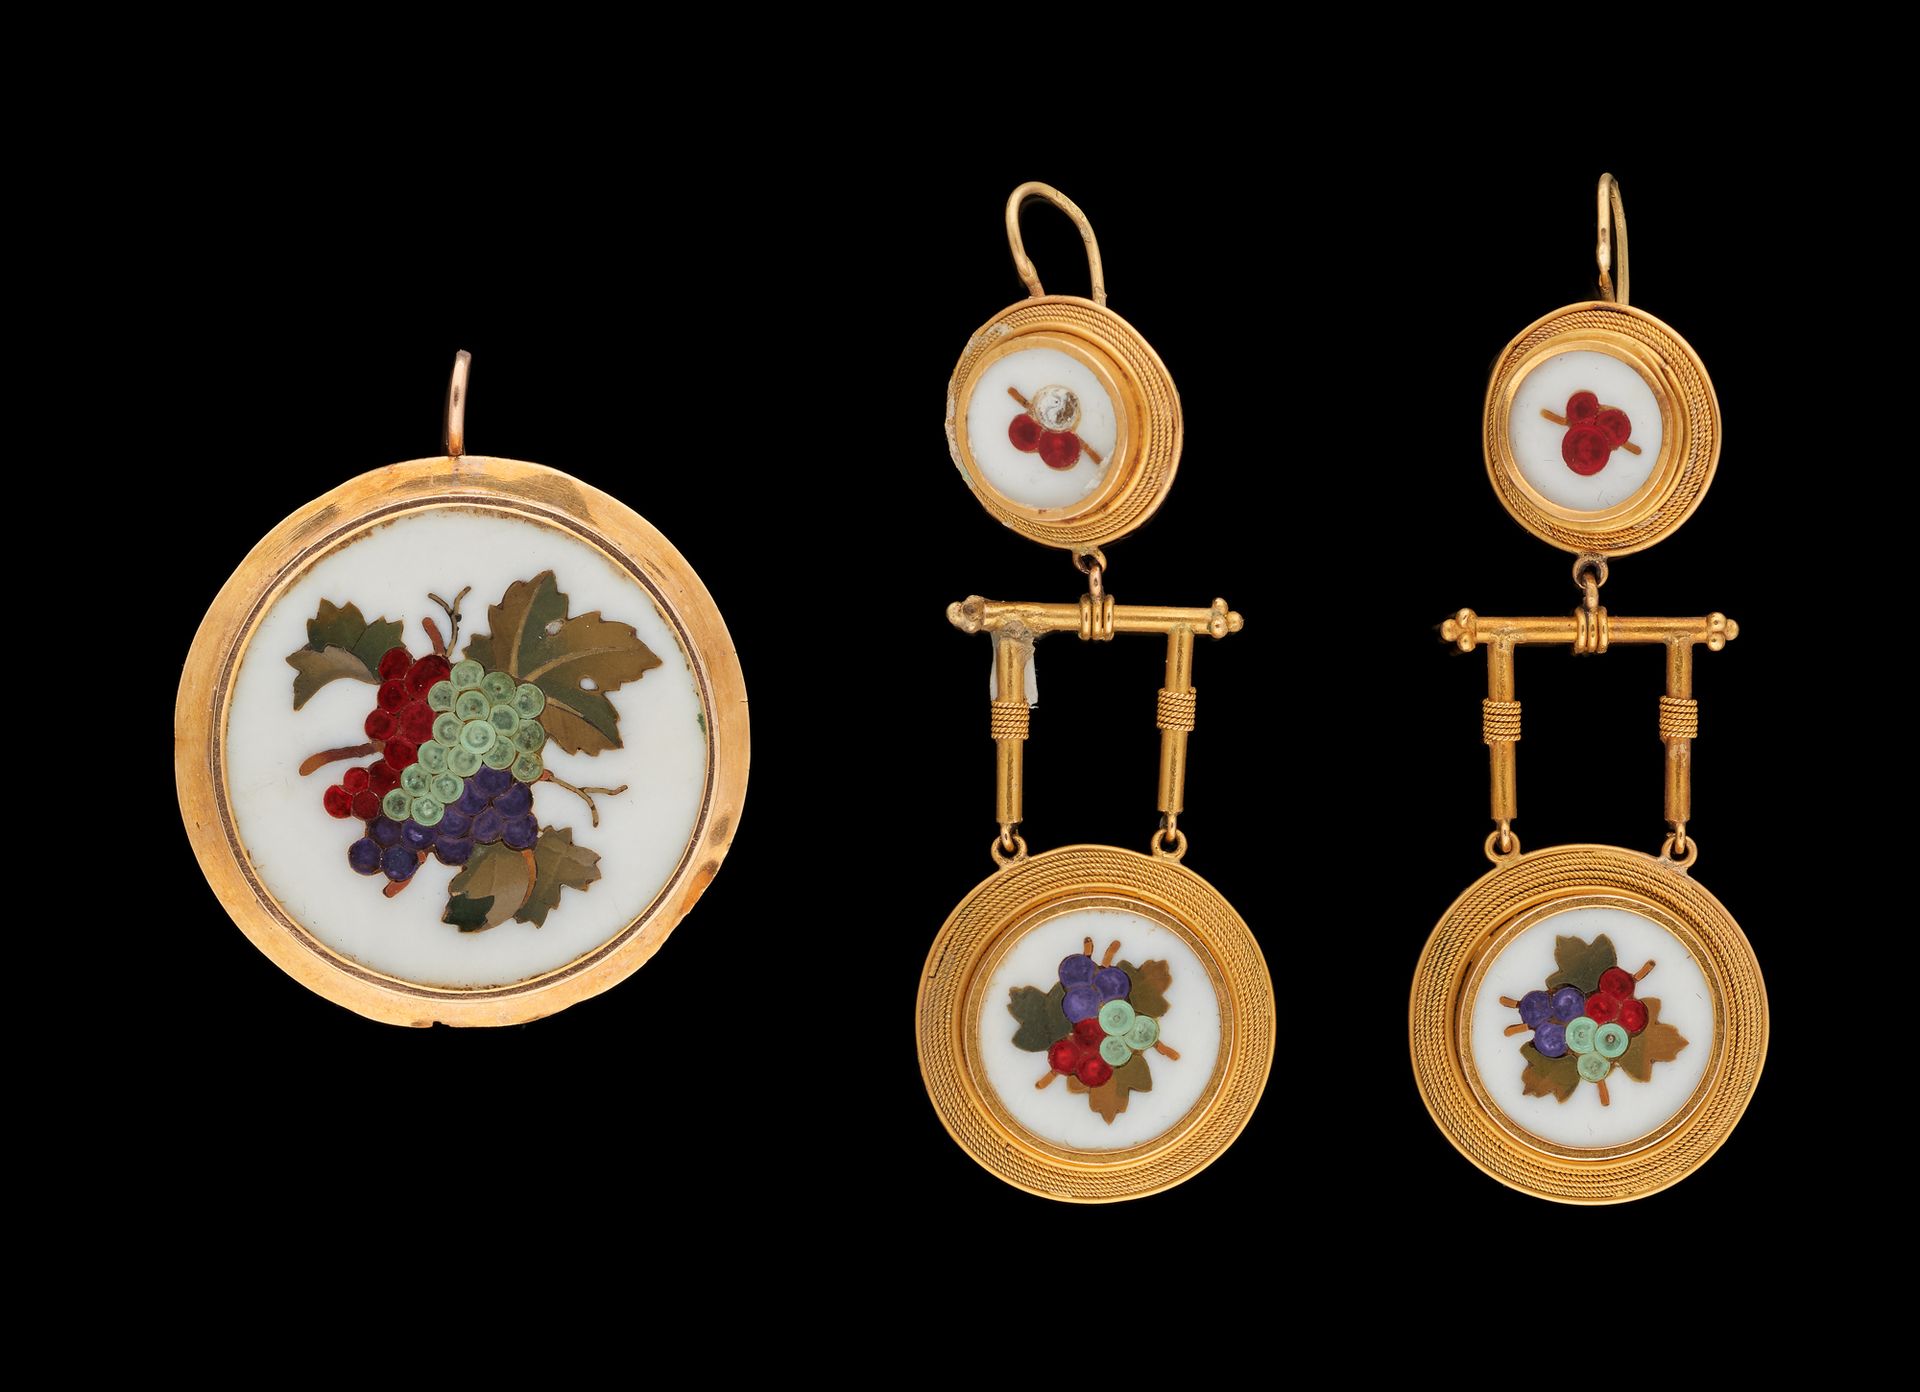 Circa 1870. 
珠宝：拍品包括一对耳环和一个黄金吊坠，装饰有葡萄图案的微型马赛克，装在原来的盒子里。
(有一点缺失)